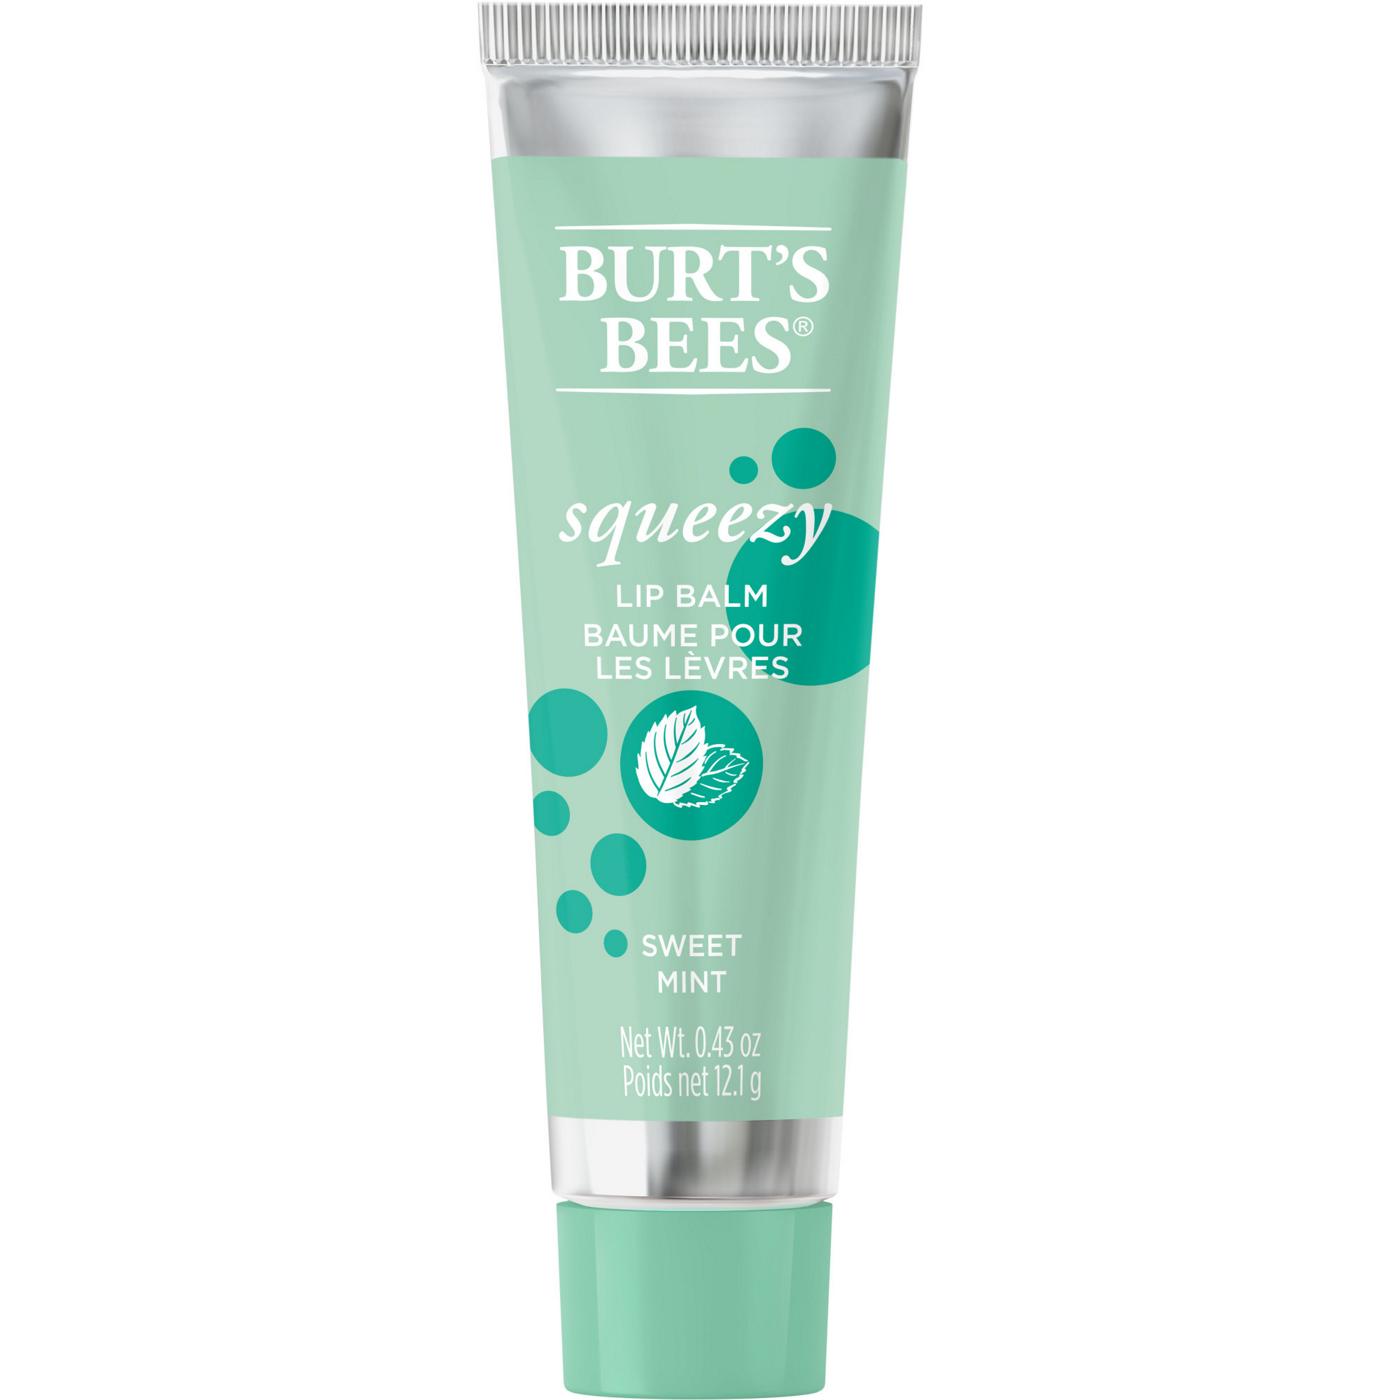 Burt's Bees Squeezy Lip Balm - Sweet Mint; image 1 of 7